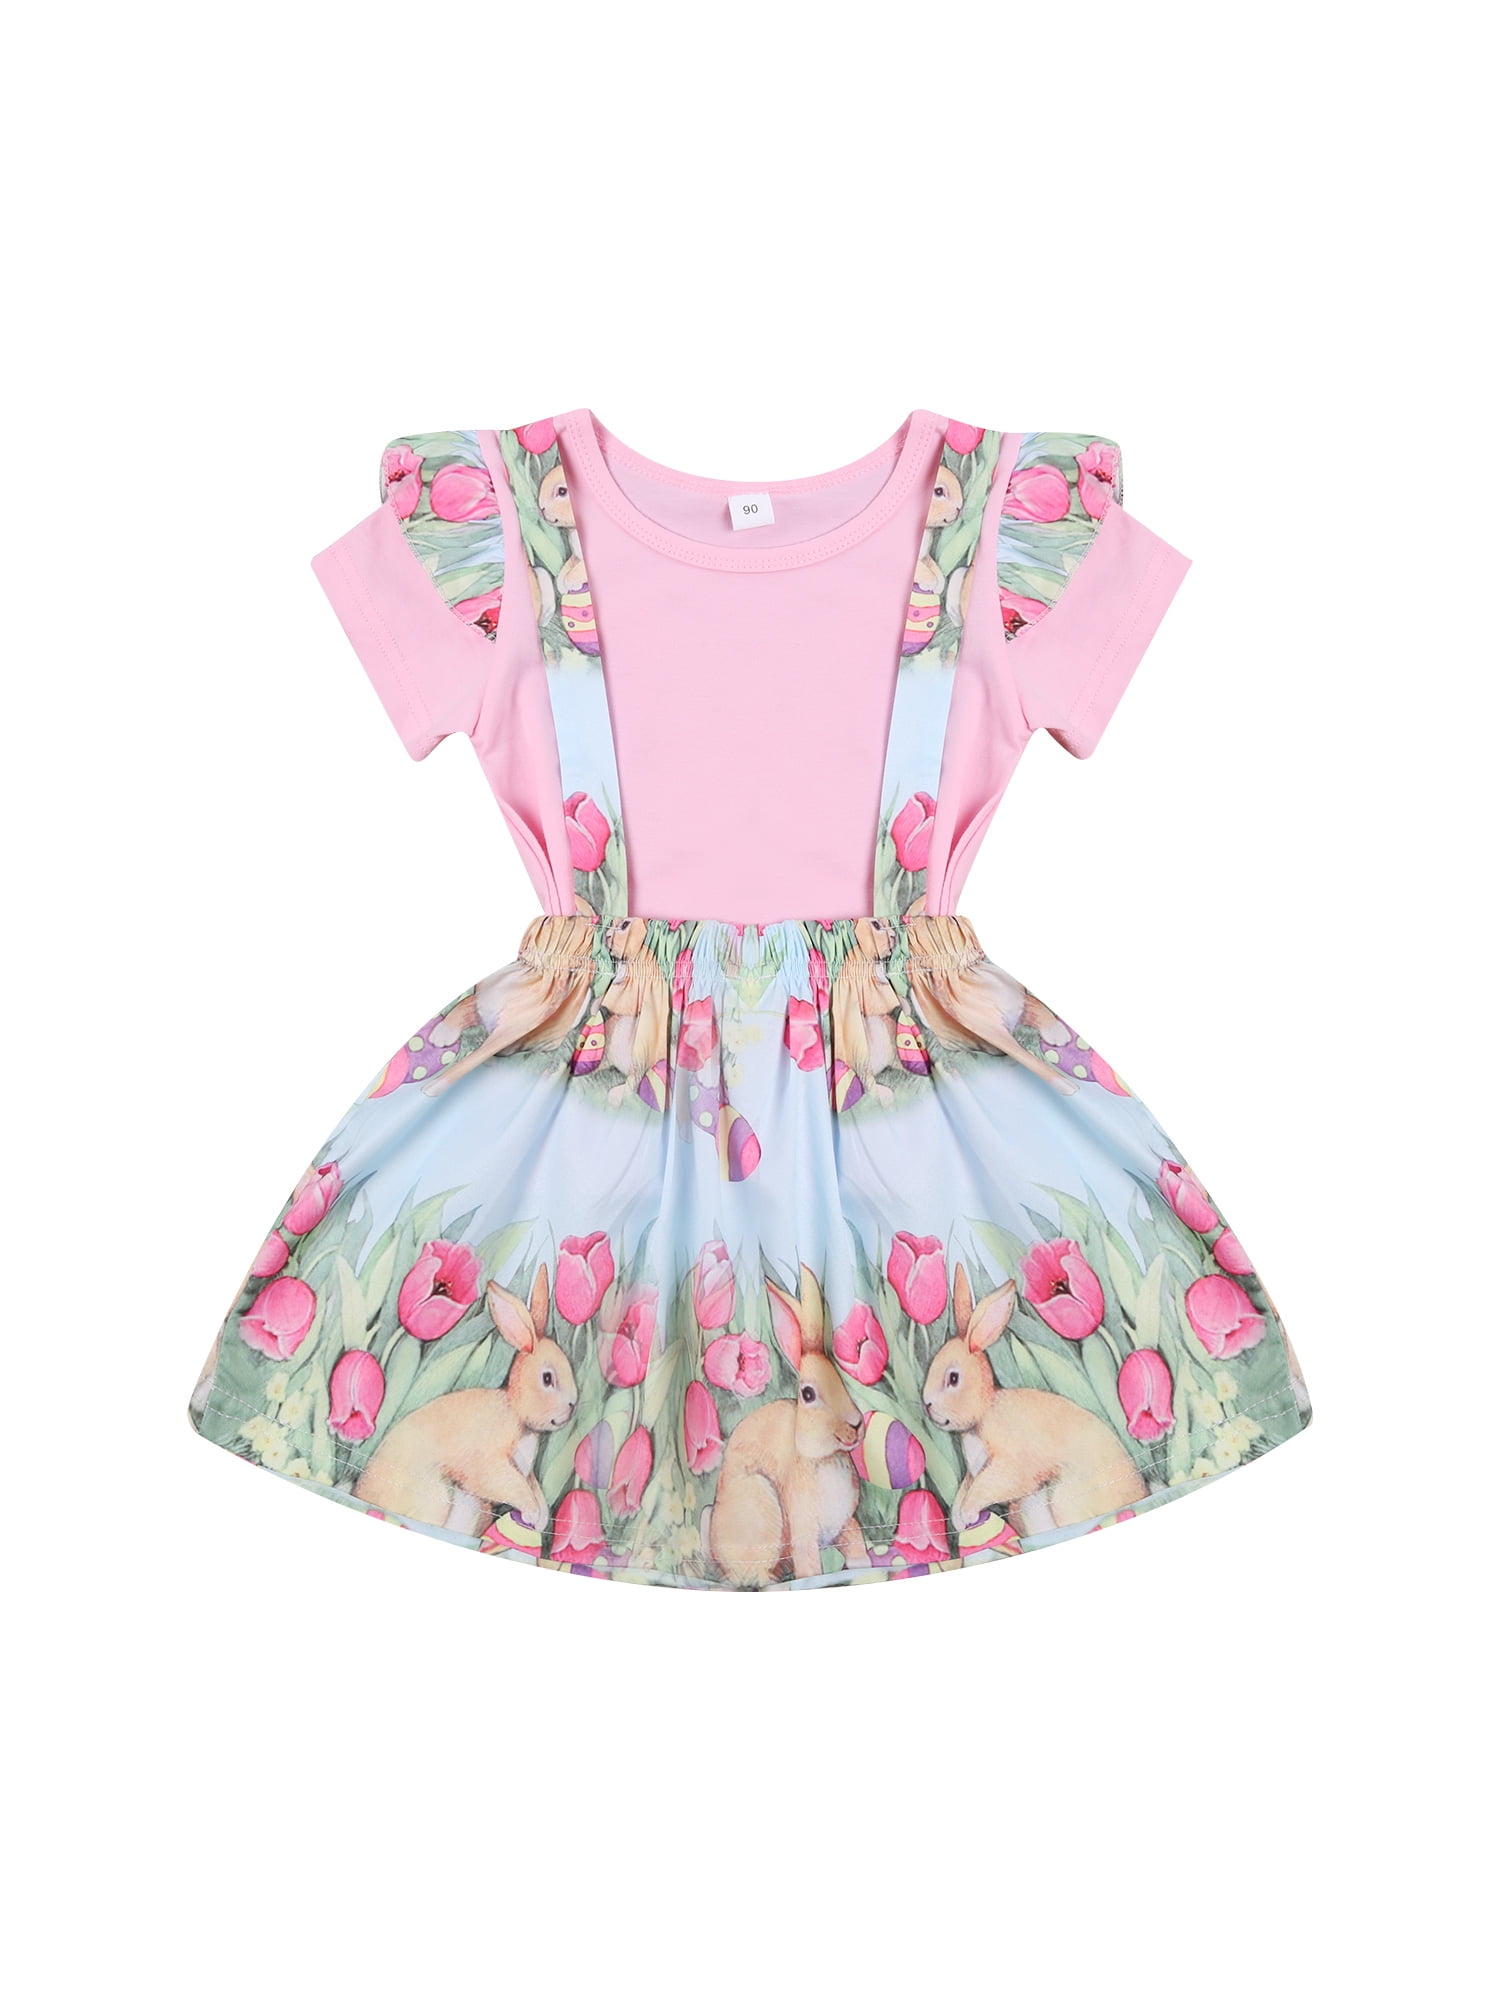 Toddler Kids Baby Girl Easter Bunny Rabbit Tops Bow Suspender Skirt Outfits Set